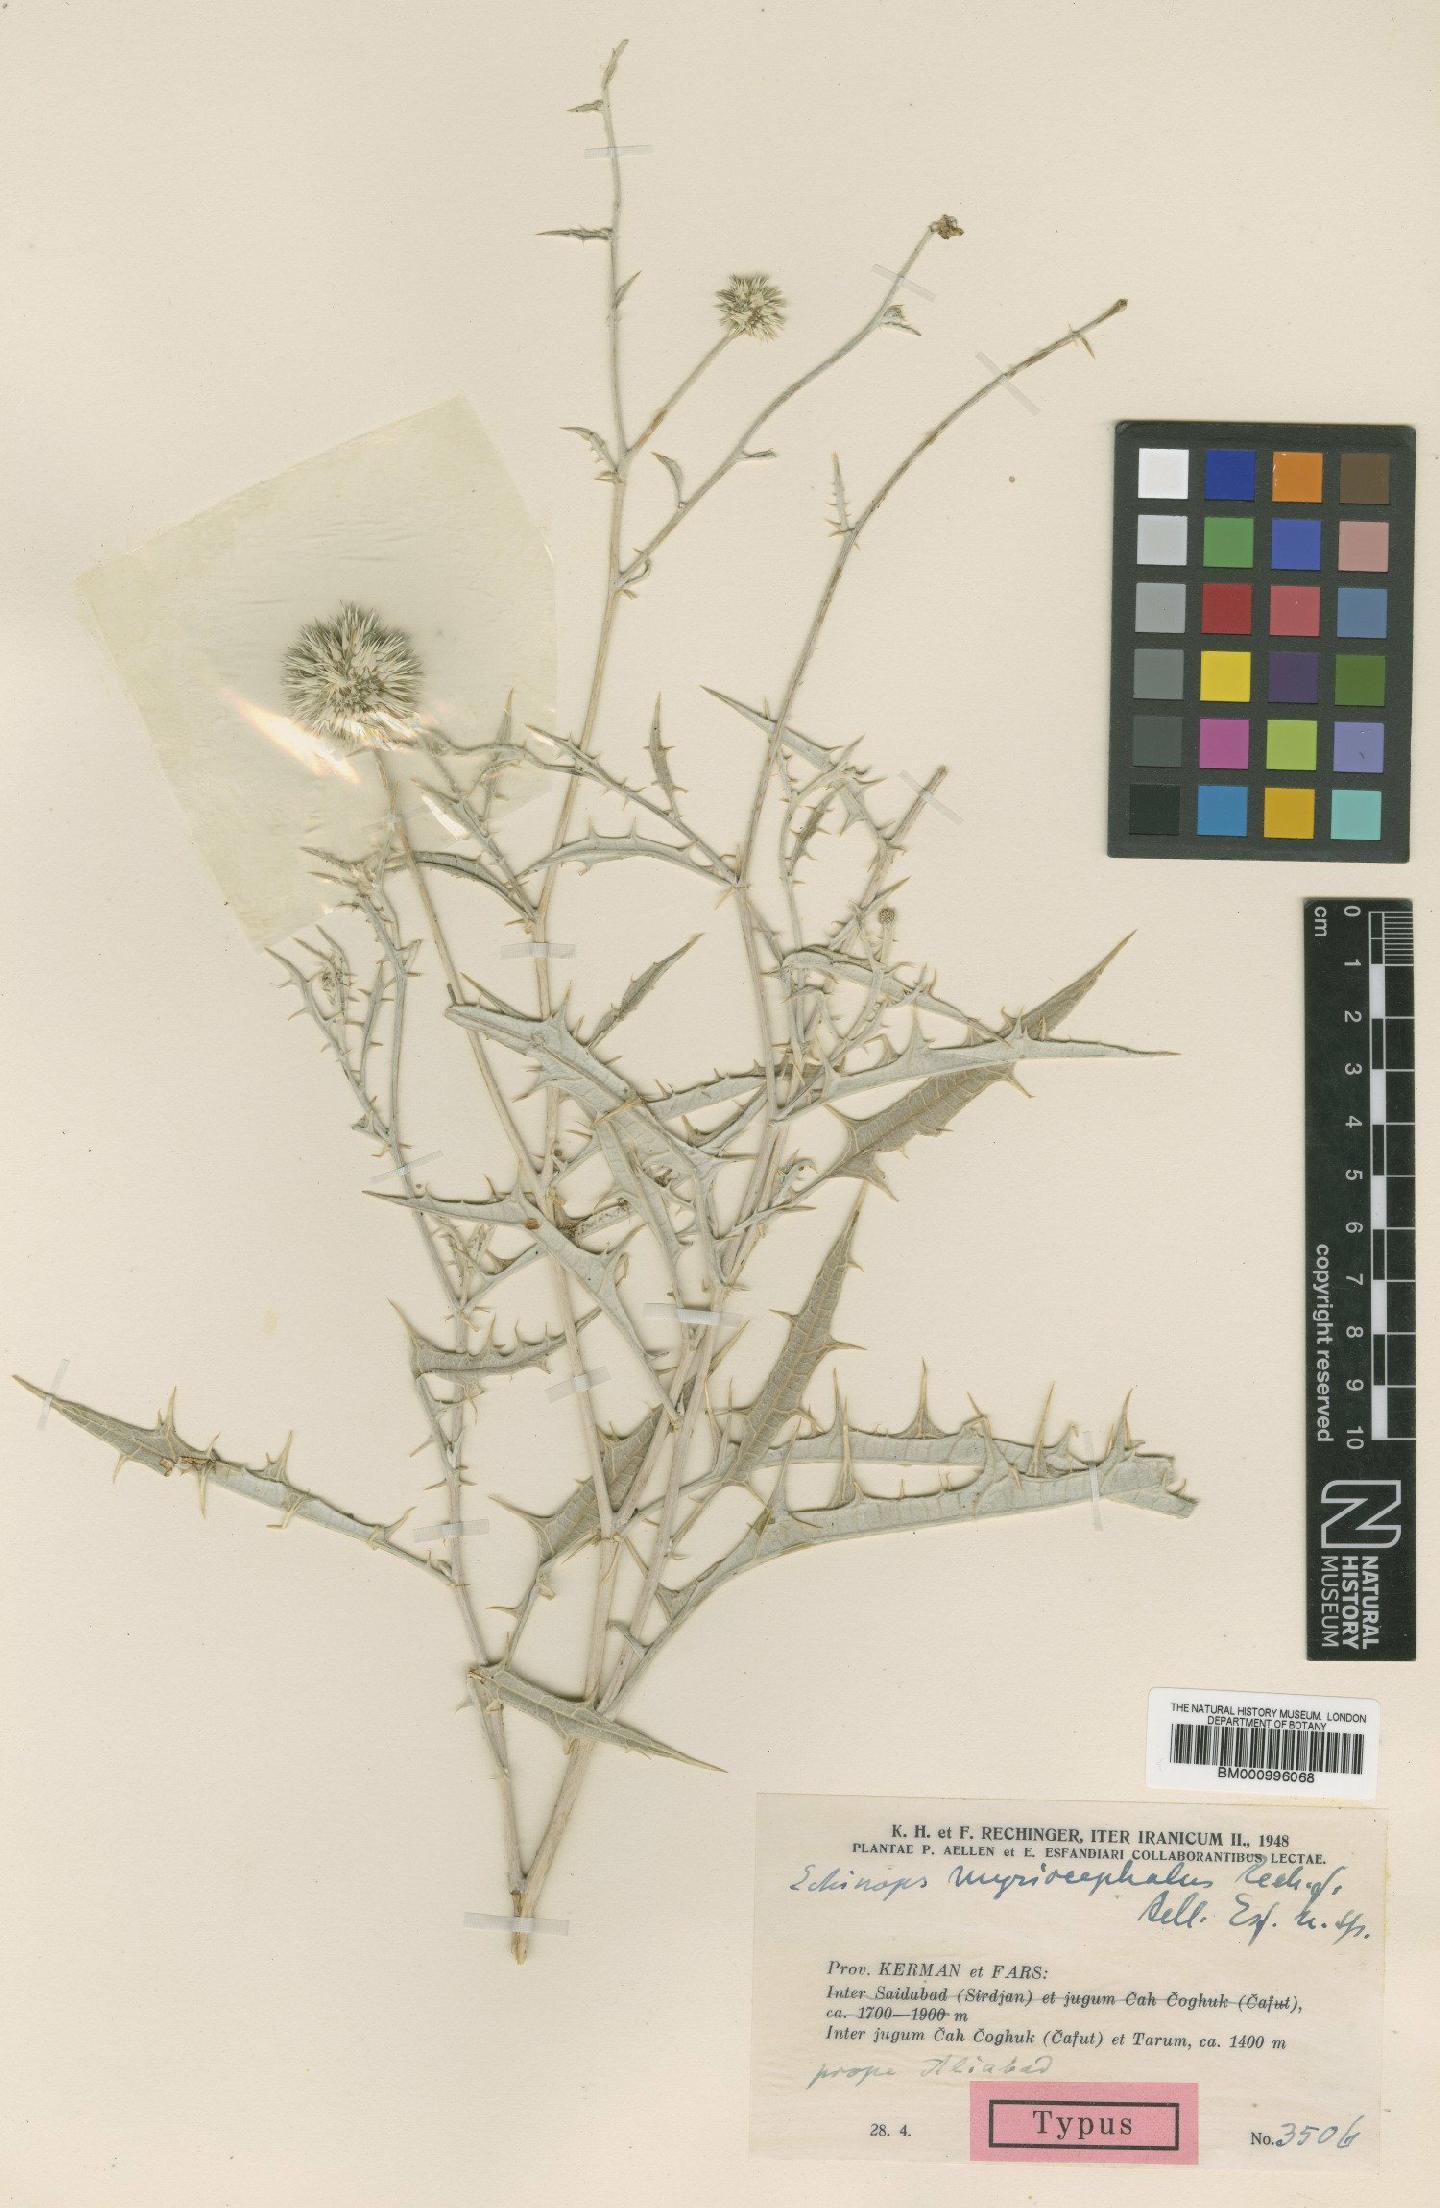 To NHMUK collection (Echinops myriocephalus Rech.f., Aellen & Esfand.; Type; NHMUK:ecatalogue:475489)